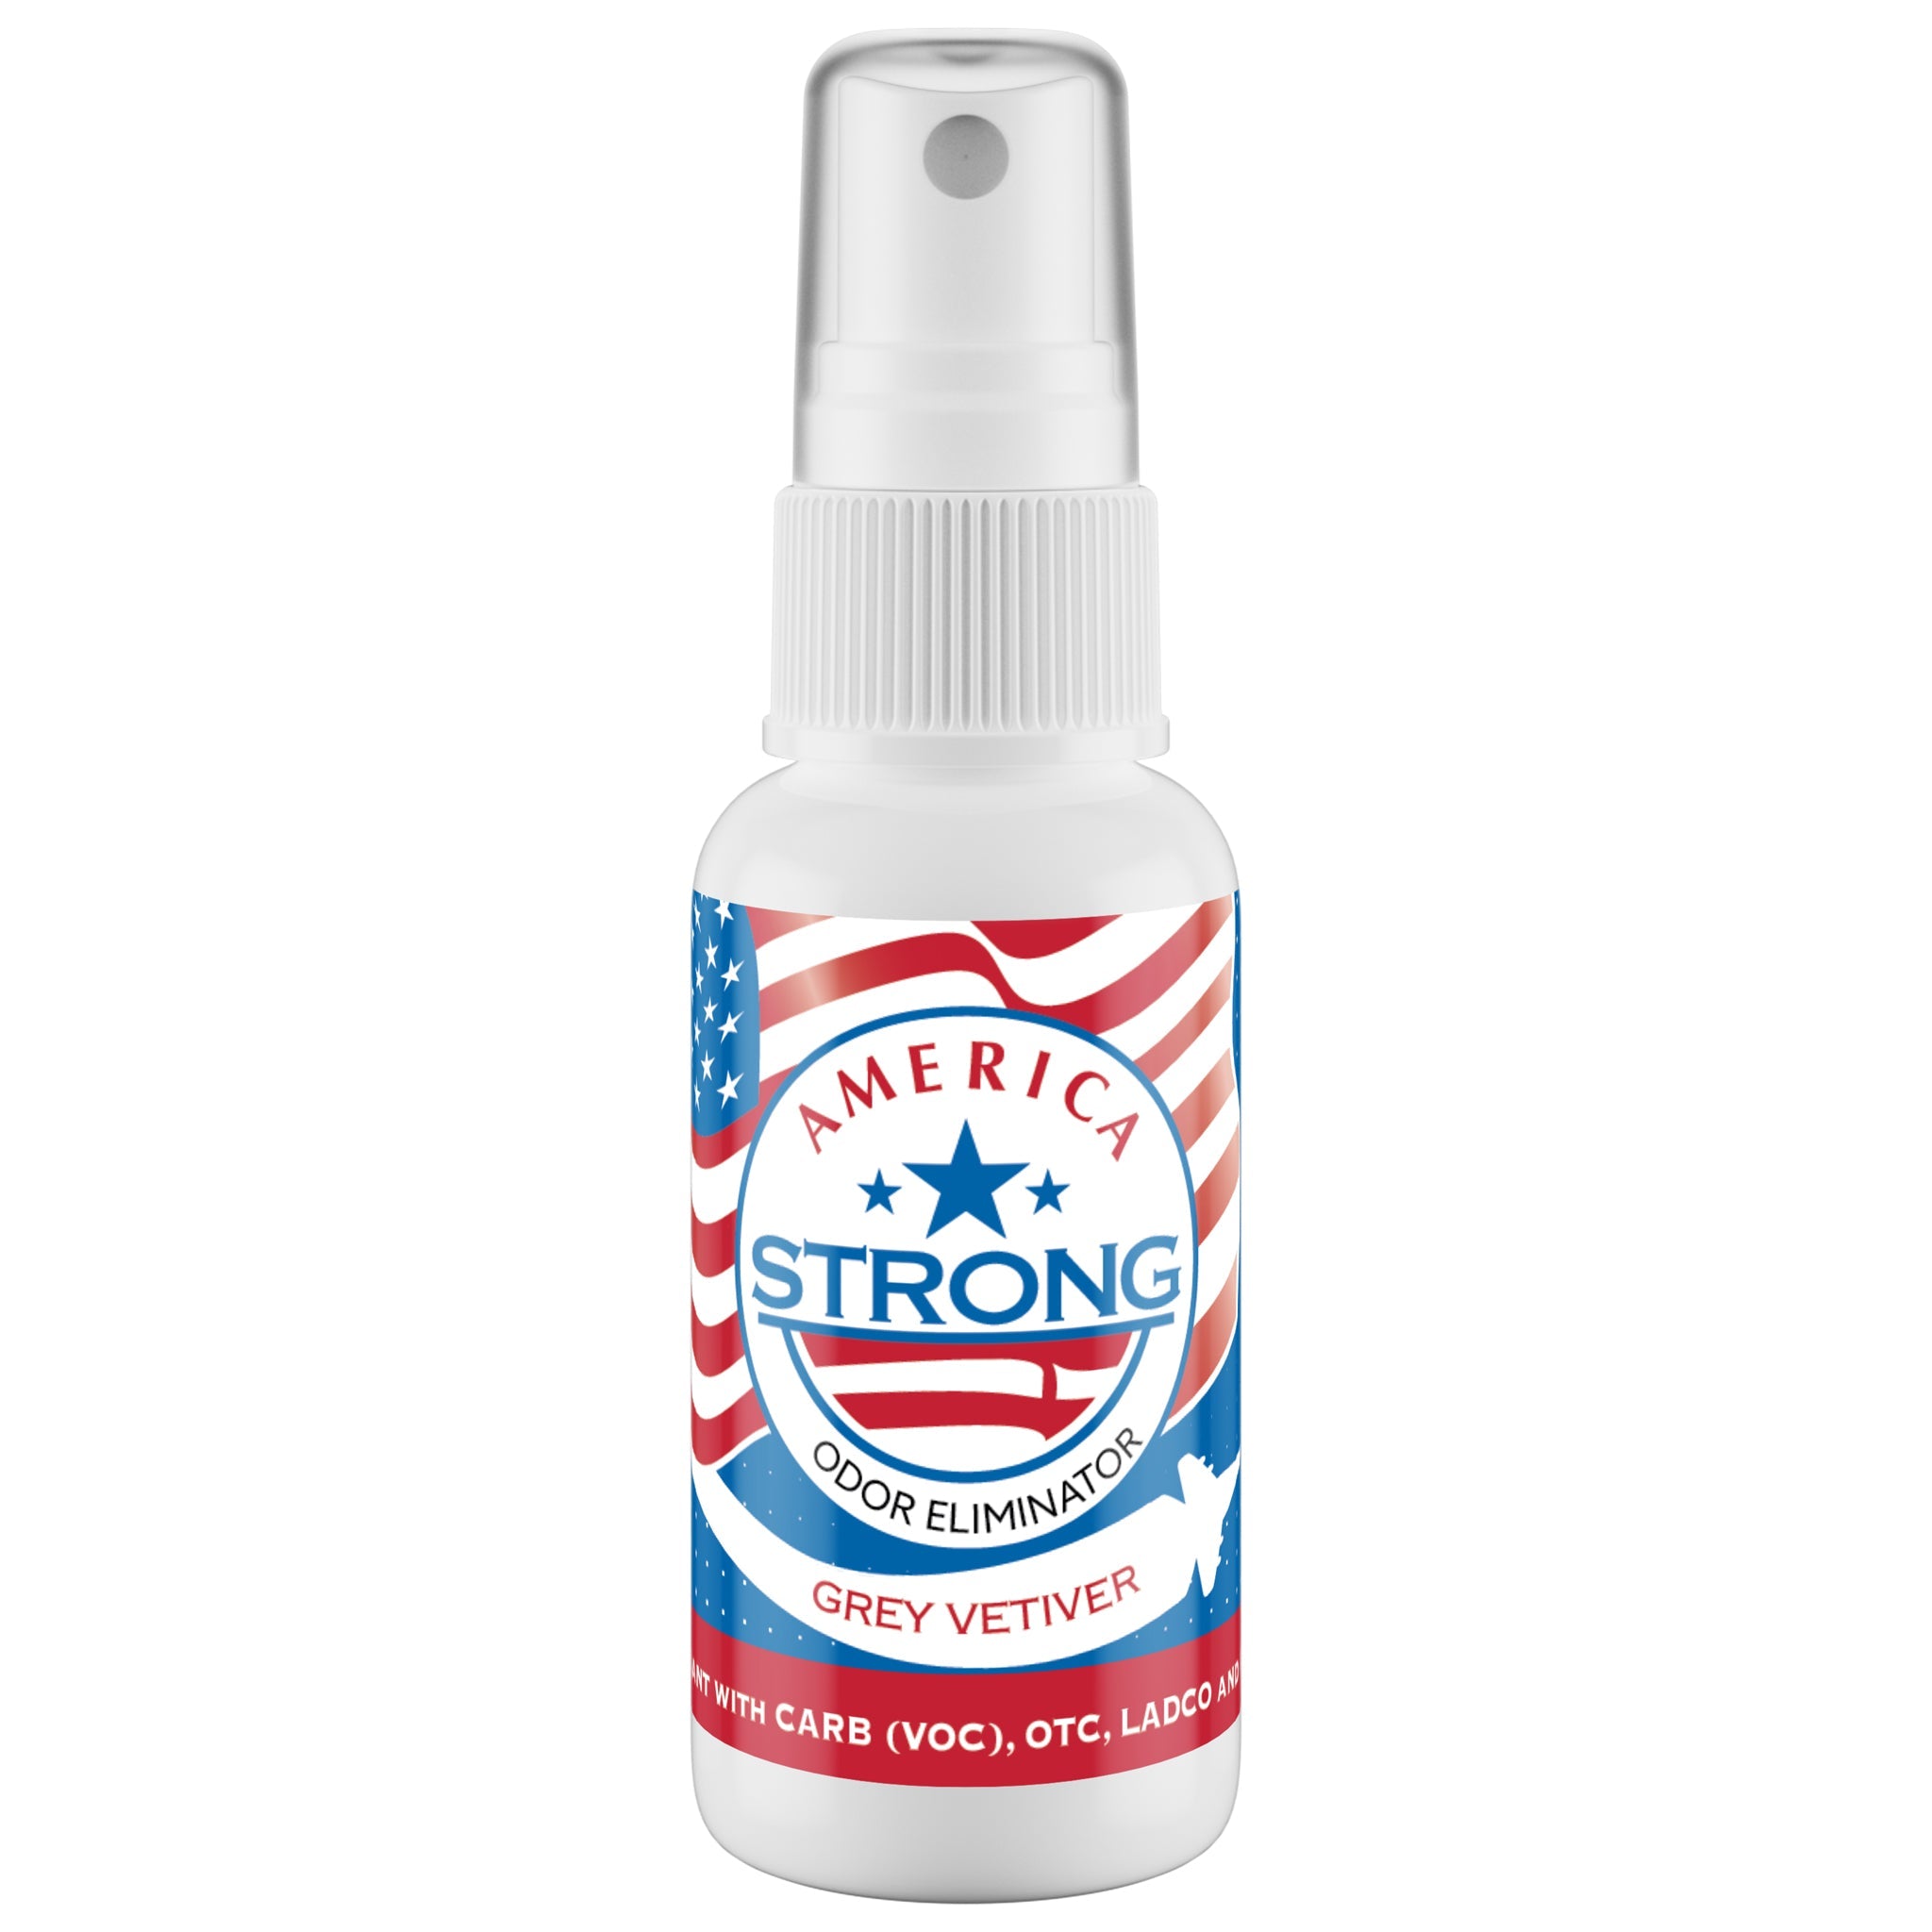 America Strong Odor Eliminator - Grey Vetiver Scent Size: 1.5oz